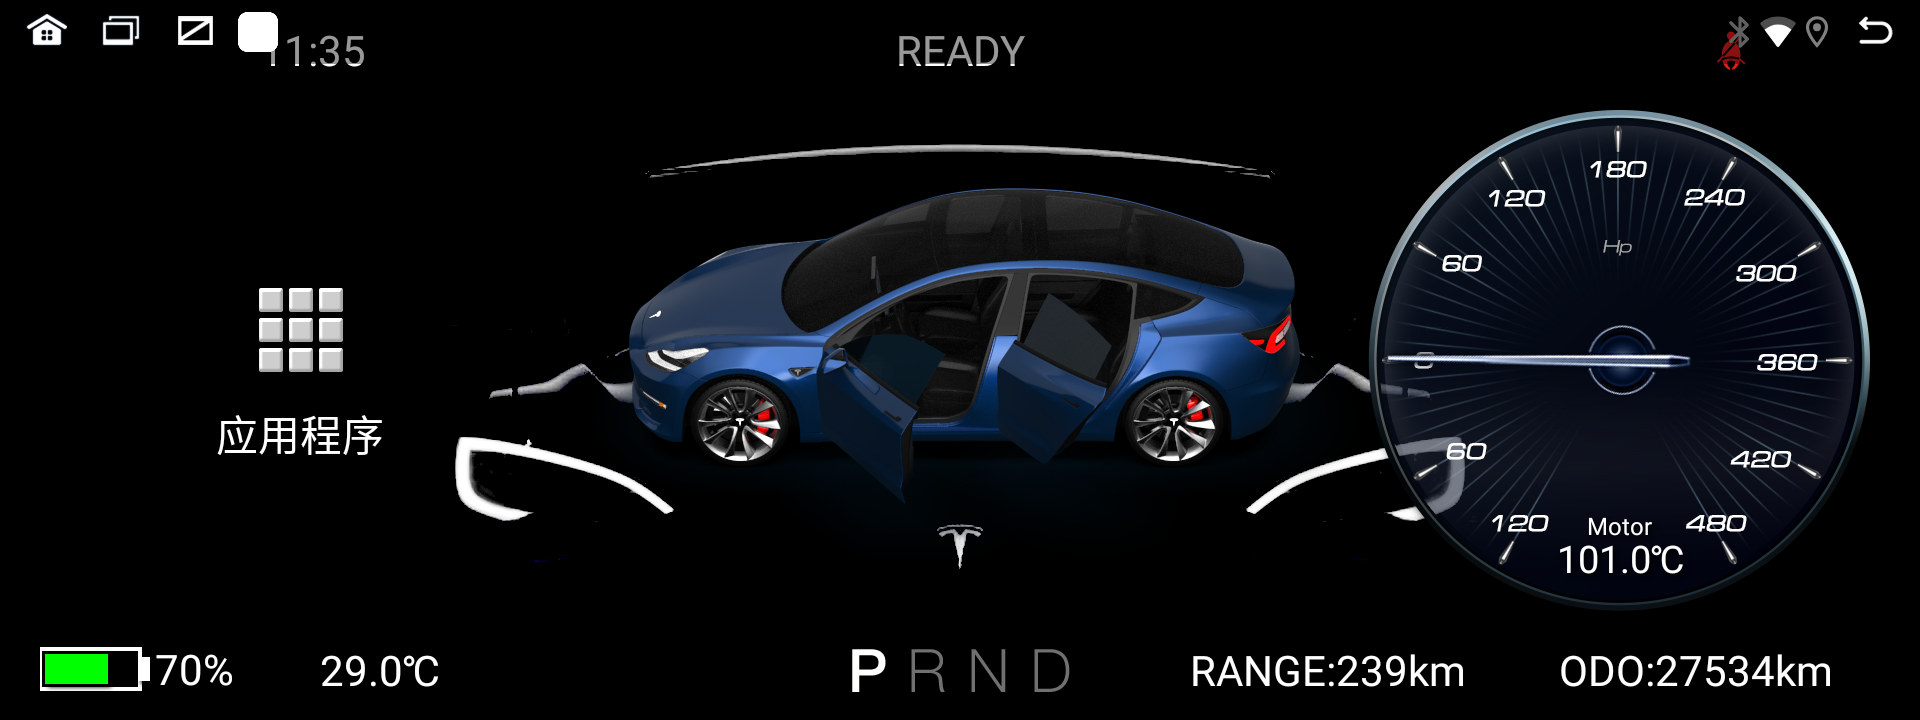 Hansshow Dashboard screen for Tesla Model 3/Y - Tesslaract